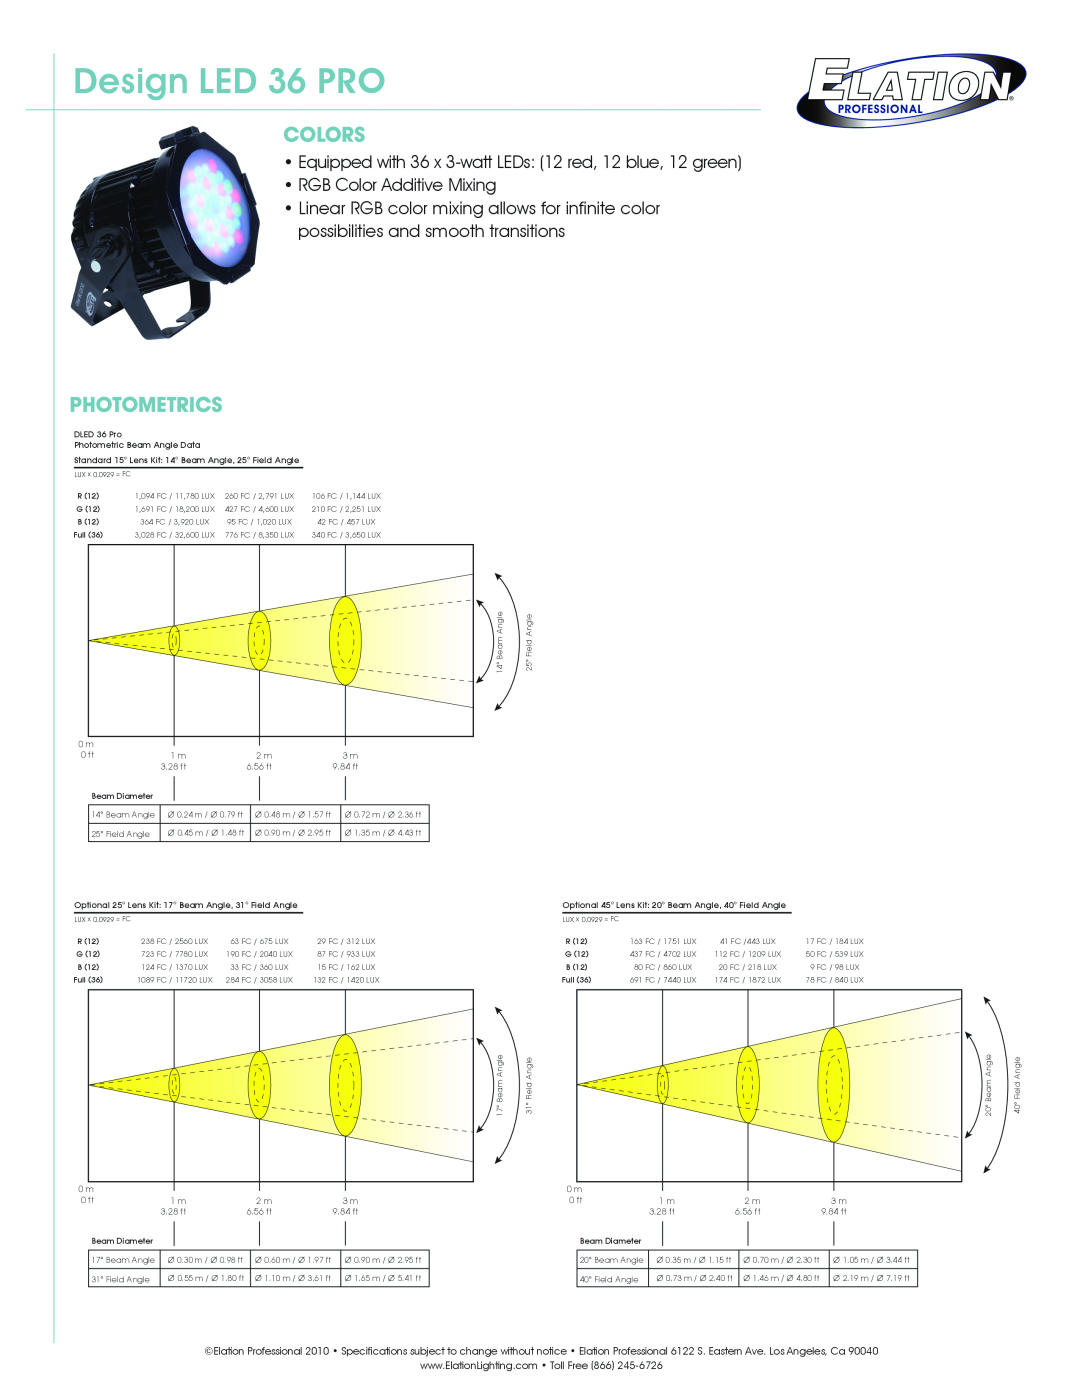 Elation Professional DLED36pro technical specifications Colors, Photometrics, Design LED 36 PRO 